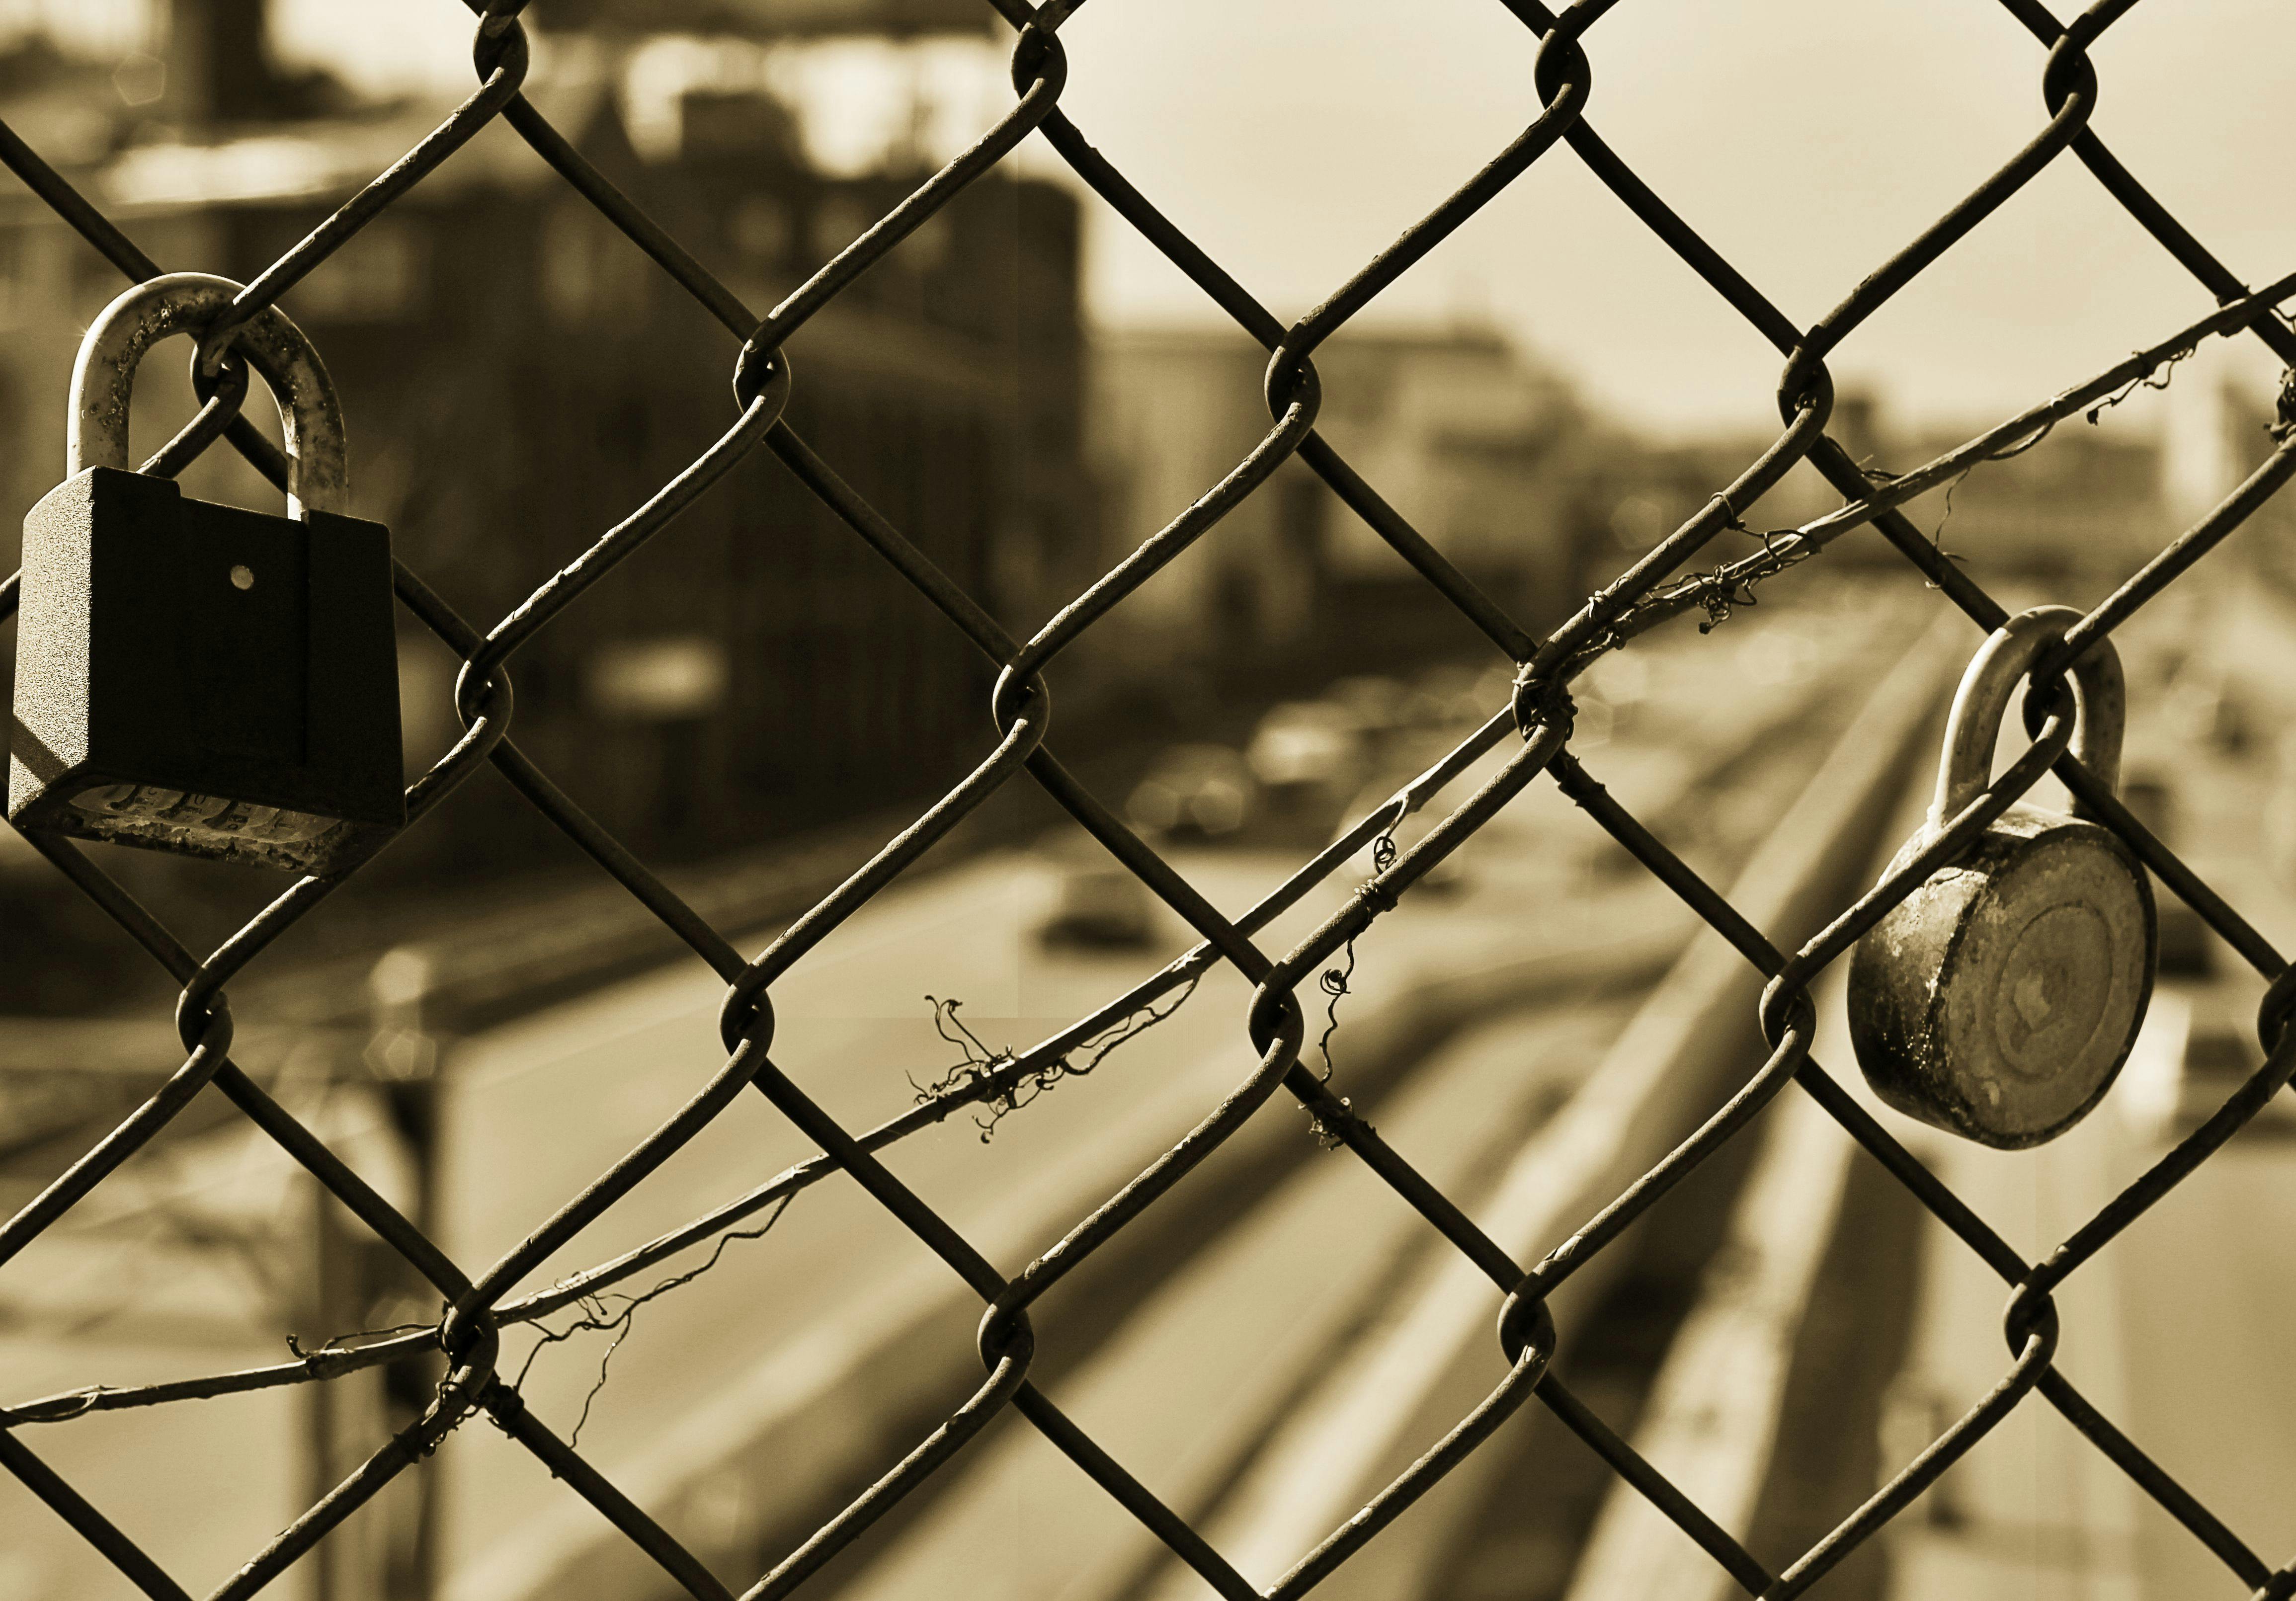 Two Black Padlocks on Grey Metal Wire Fence